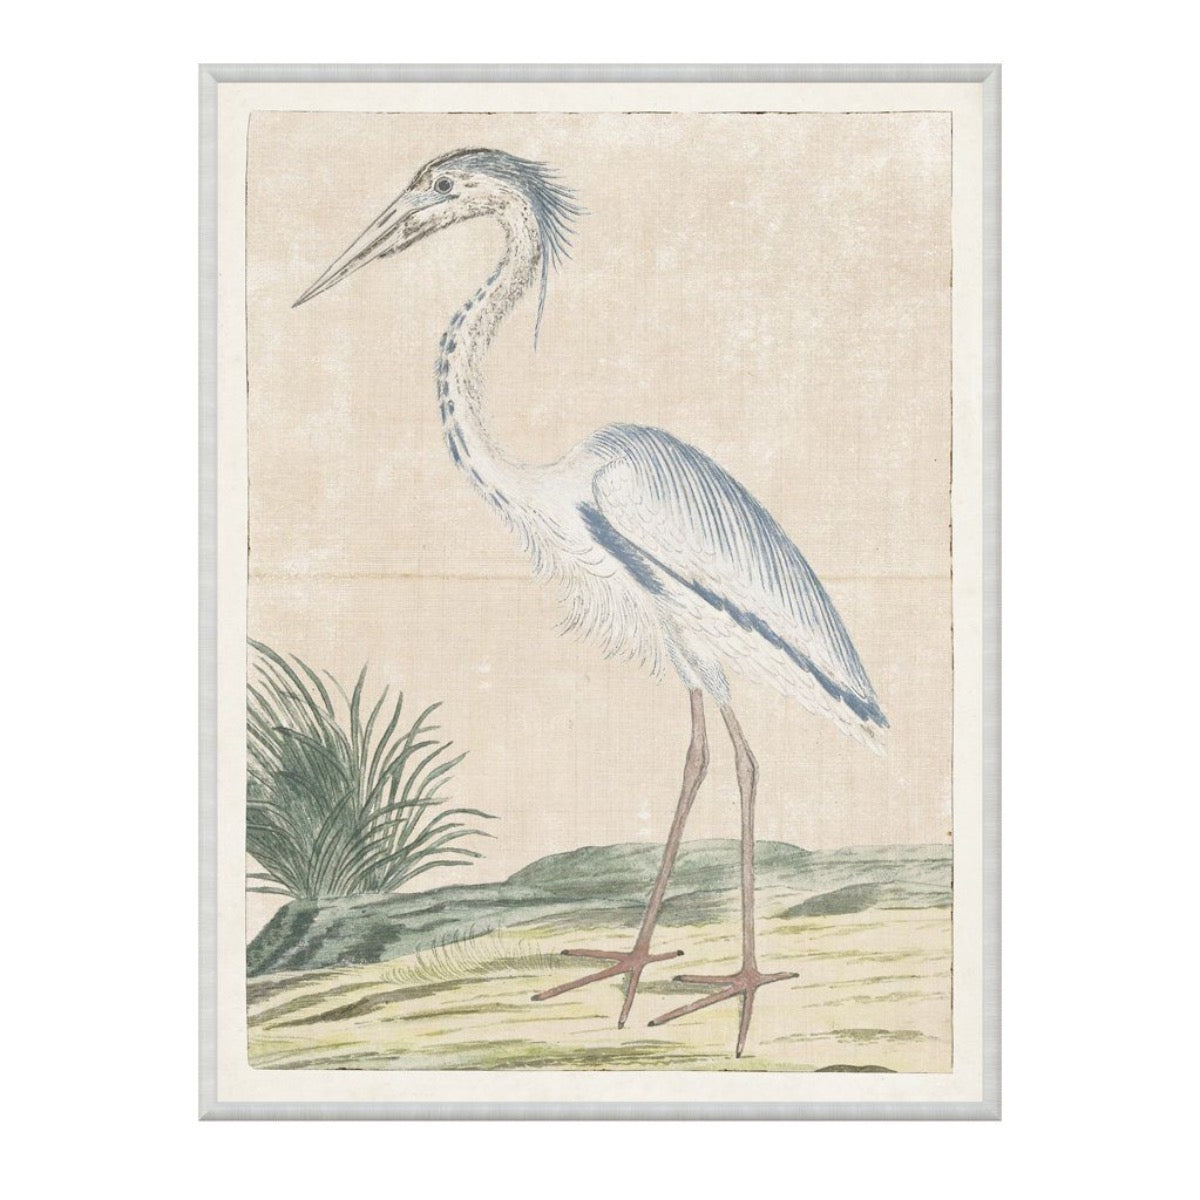 Grey Heron 1778. Front view.